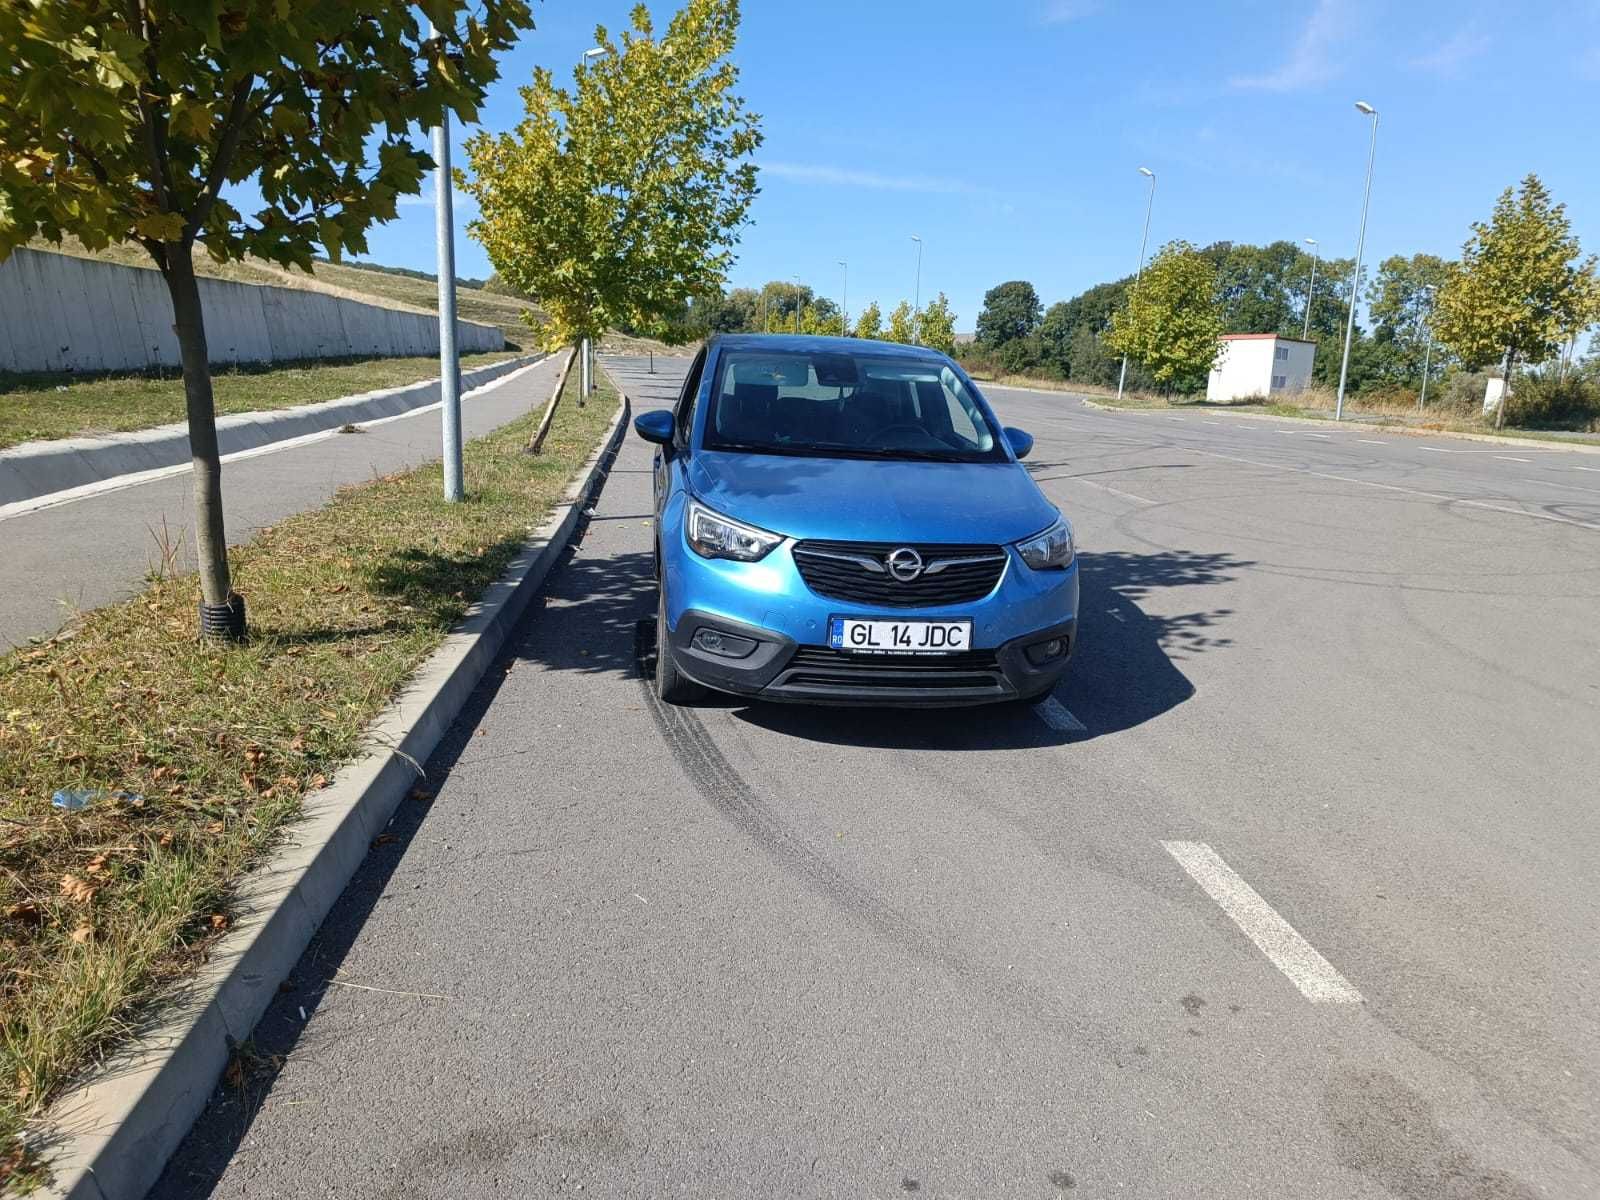 Vand Opel Crossland x 2018,1.2,130 CP,unic prop.Pret 9600 euro.Galati